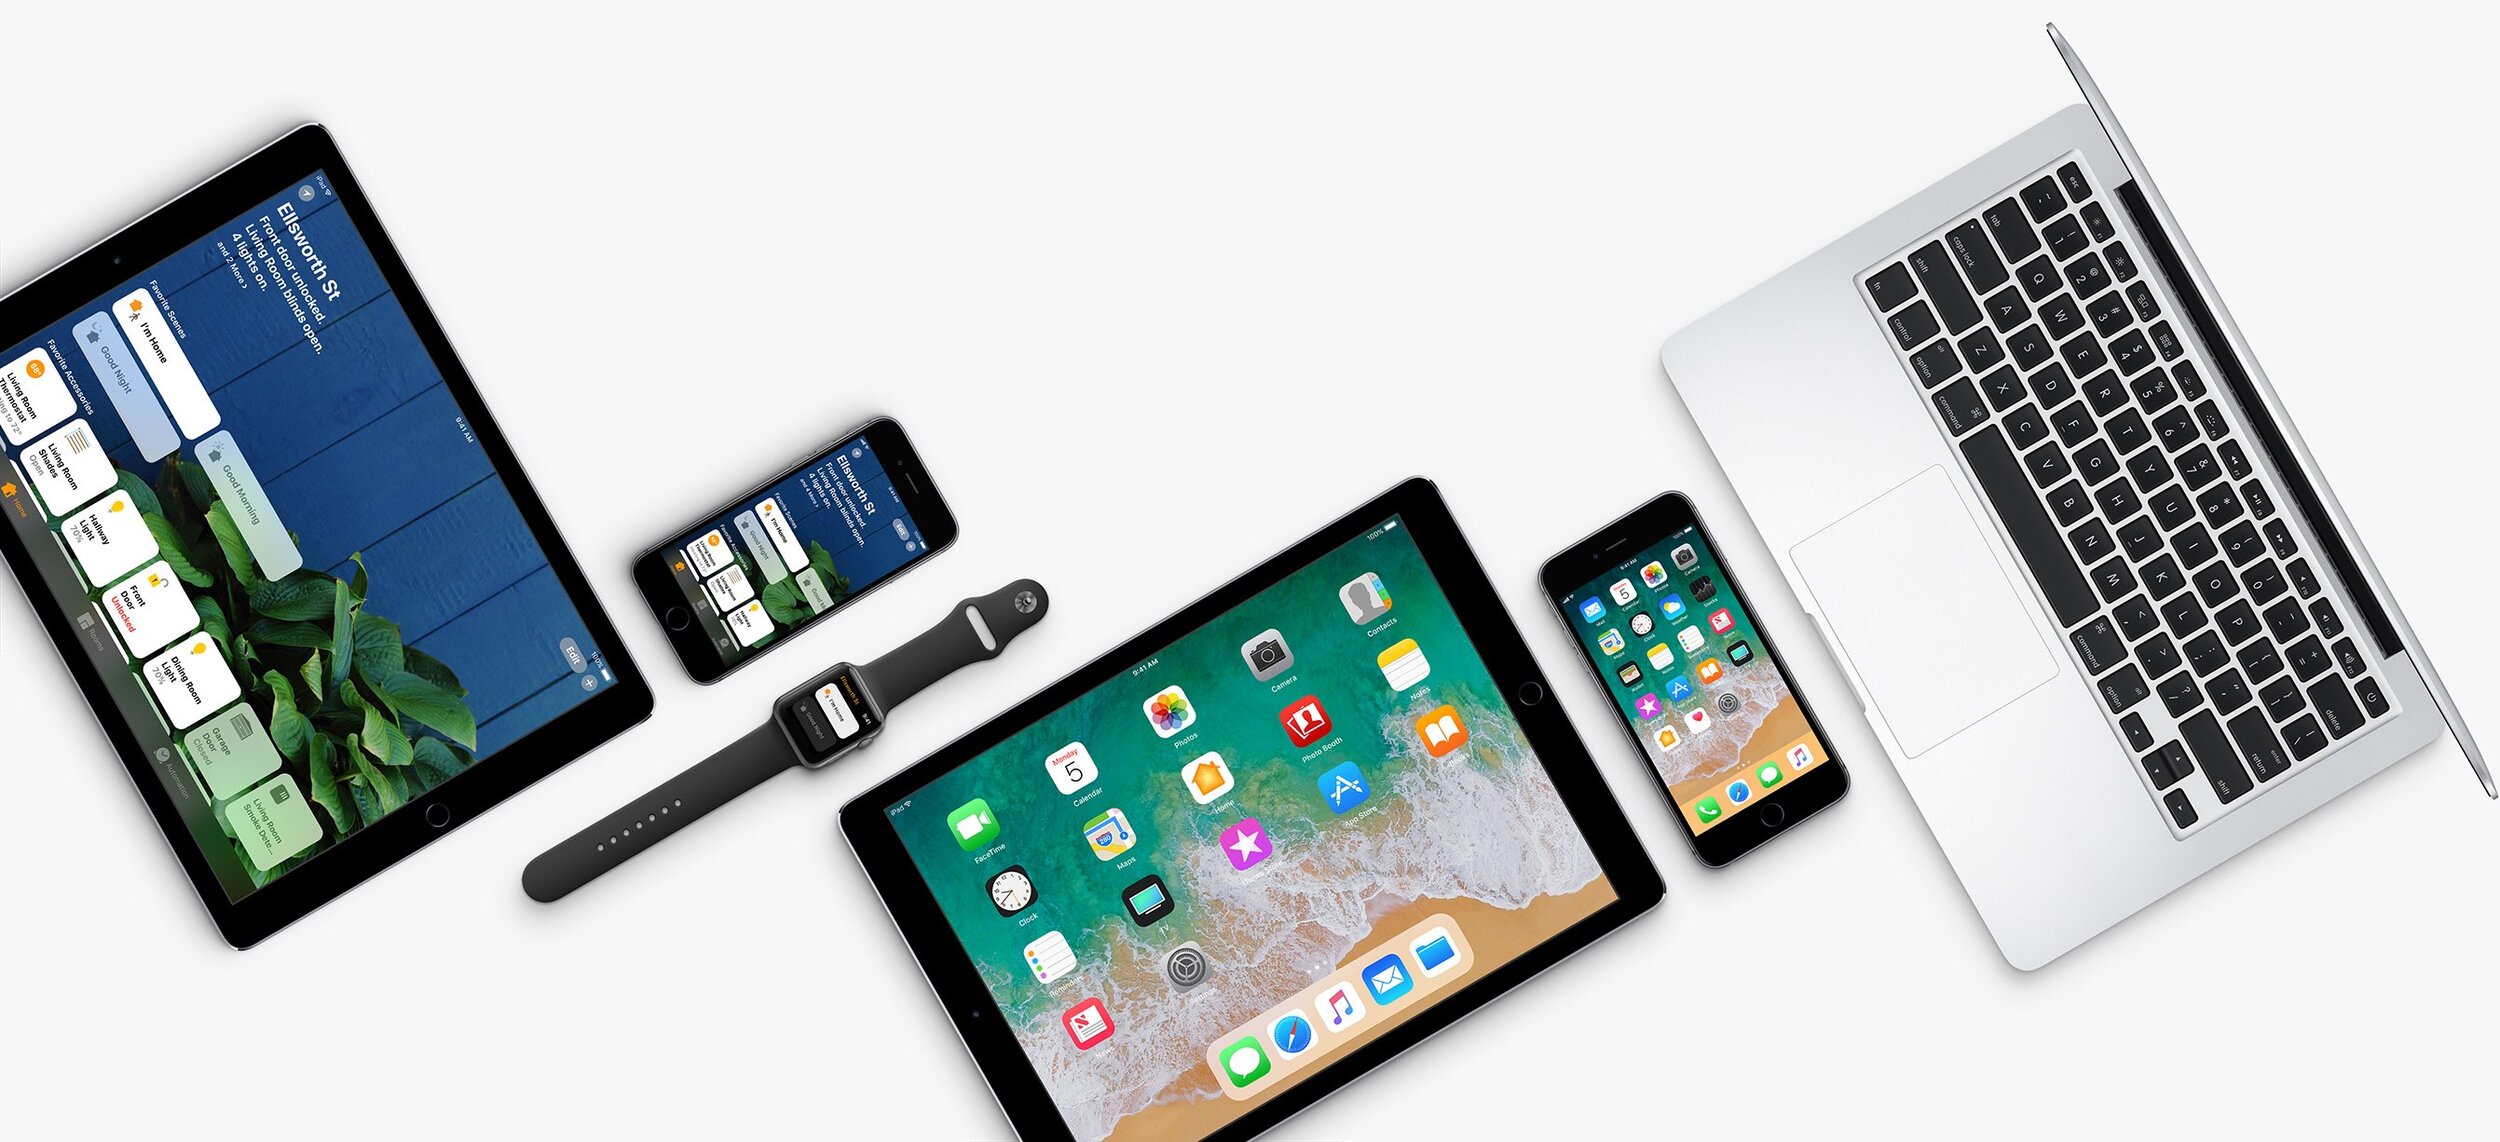 iOS-11-teaser-iPhone-iPad-MacBook-Apple-Watch-Home-app.jpg